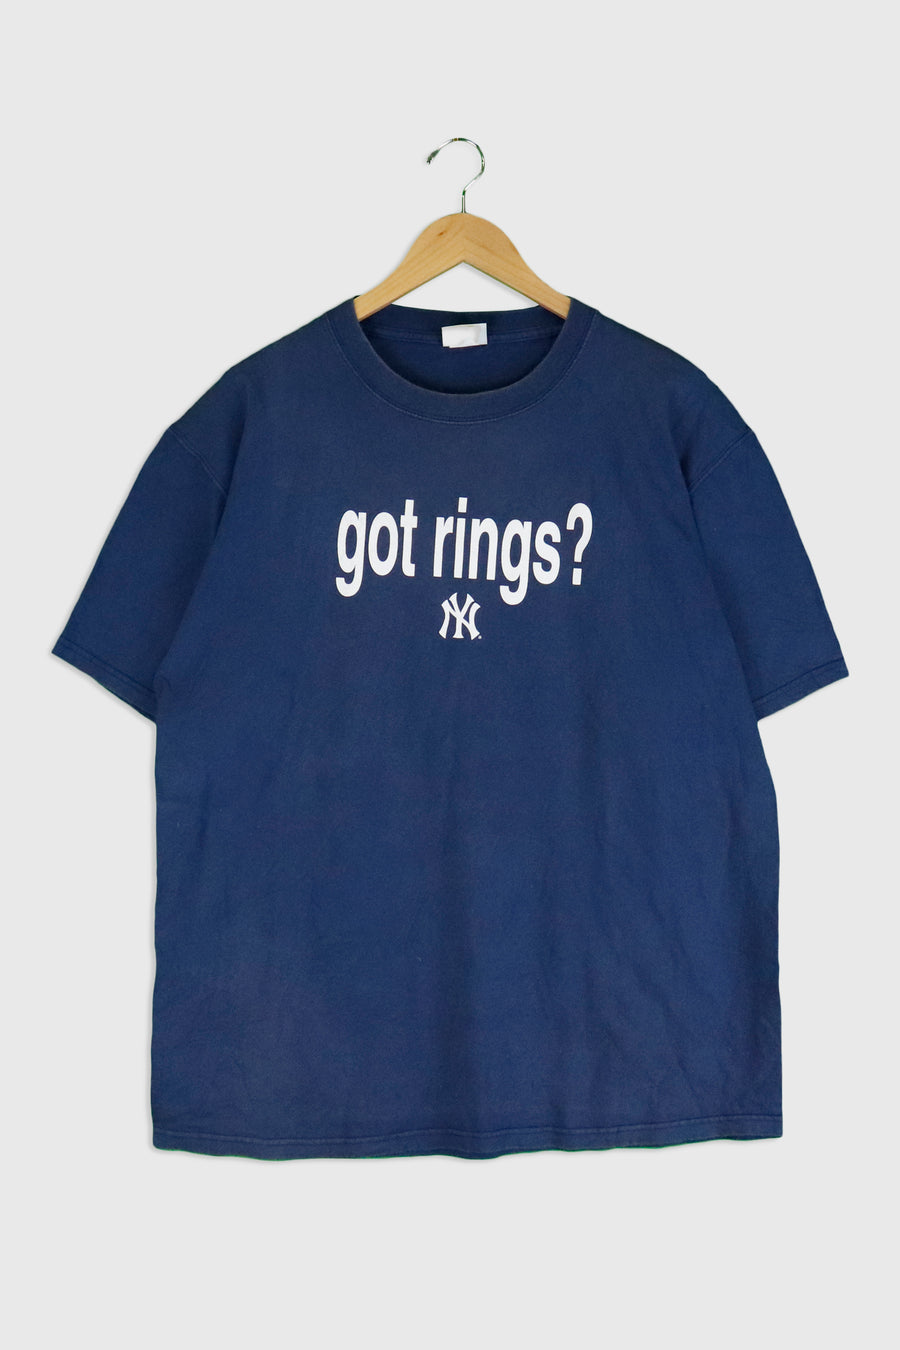 Vintage MLB NY Yankees Got Rings T Shirt Sz L